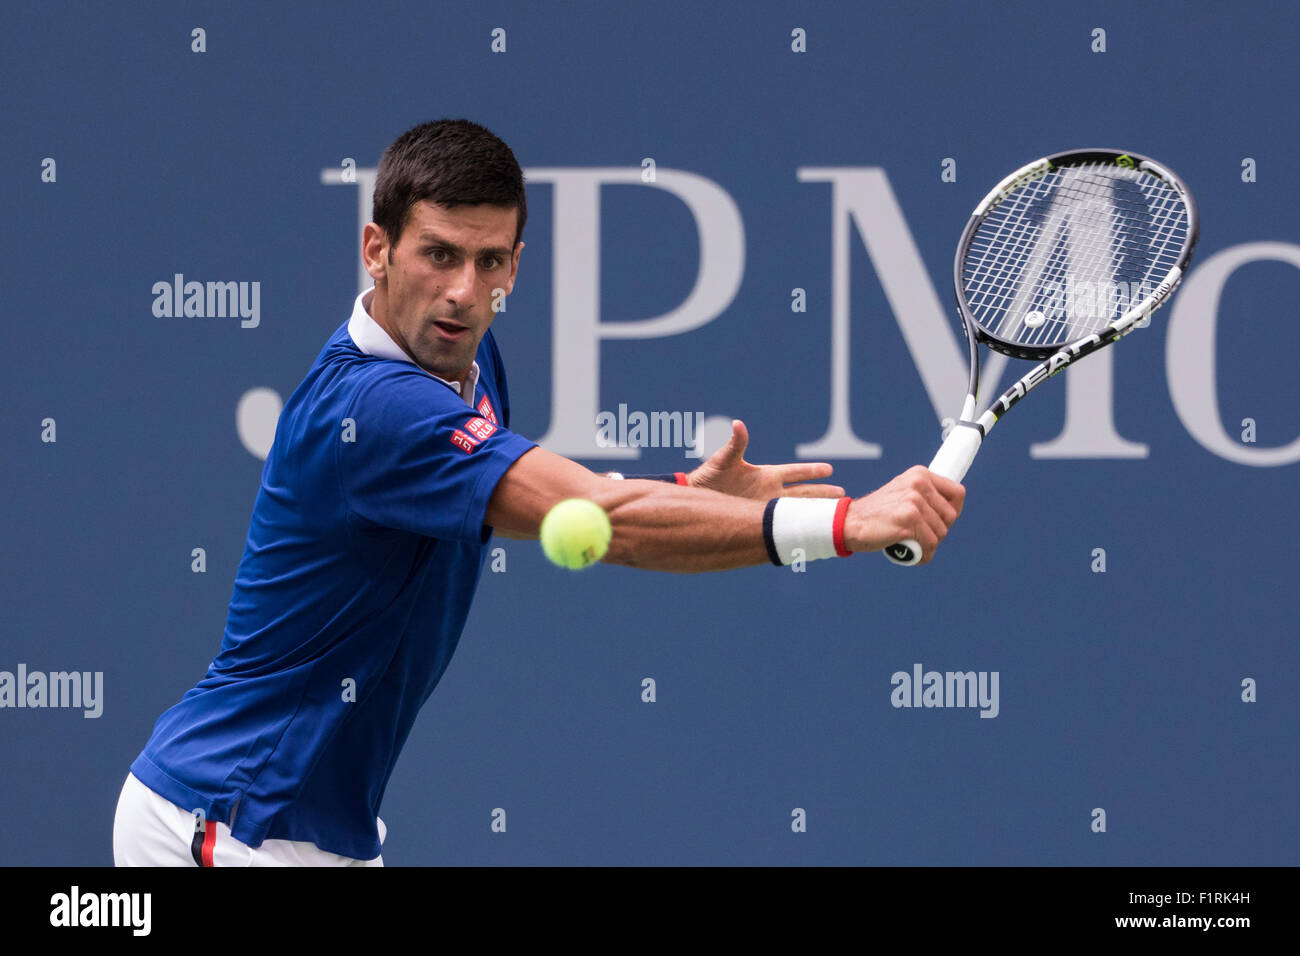 Novak Djokovic 2015 High Resolution Stock Photography and Images - Alamy